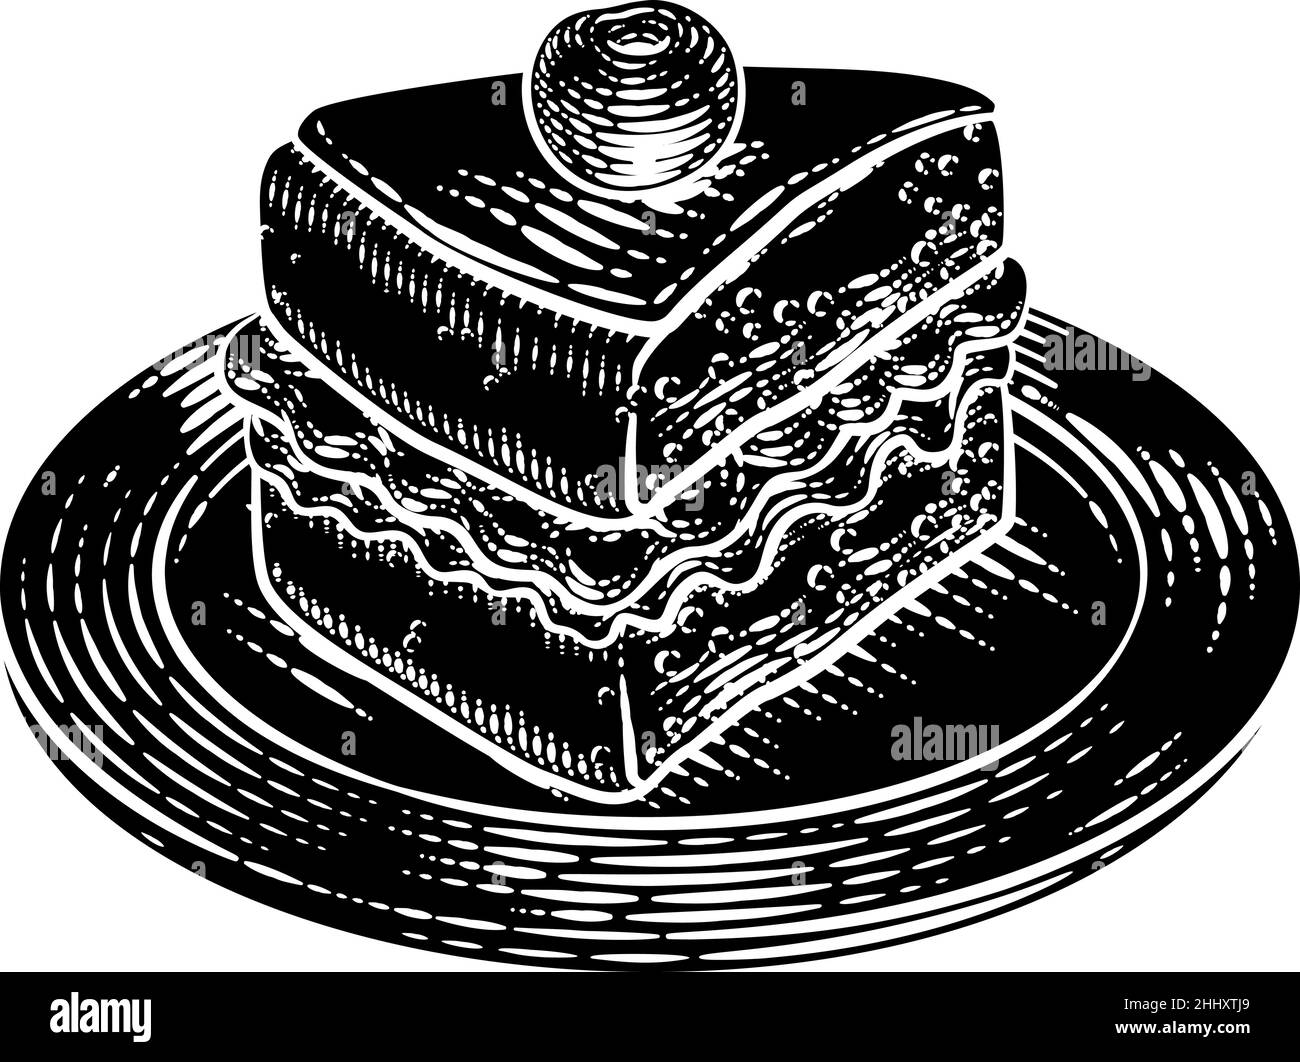 Gâteau Eponge Slice Jam Cream Woodcut dessin Illustration de Vecteur